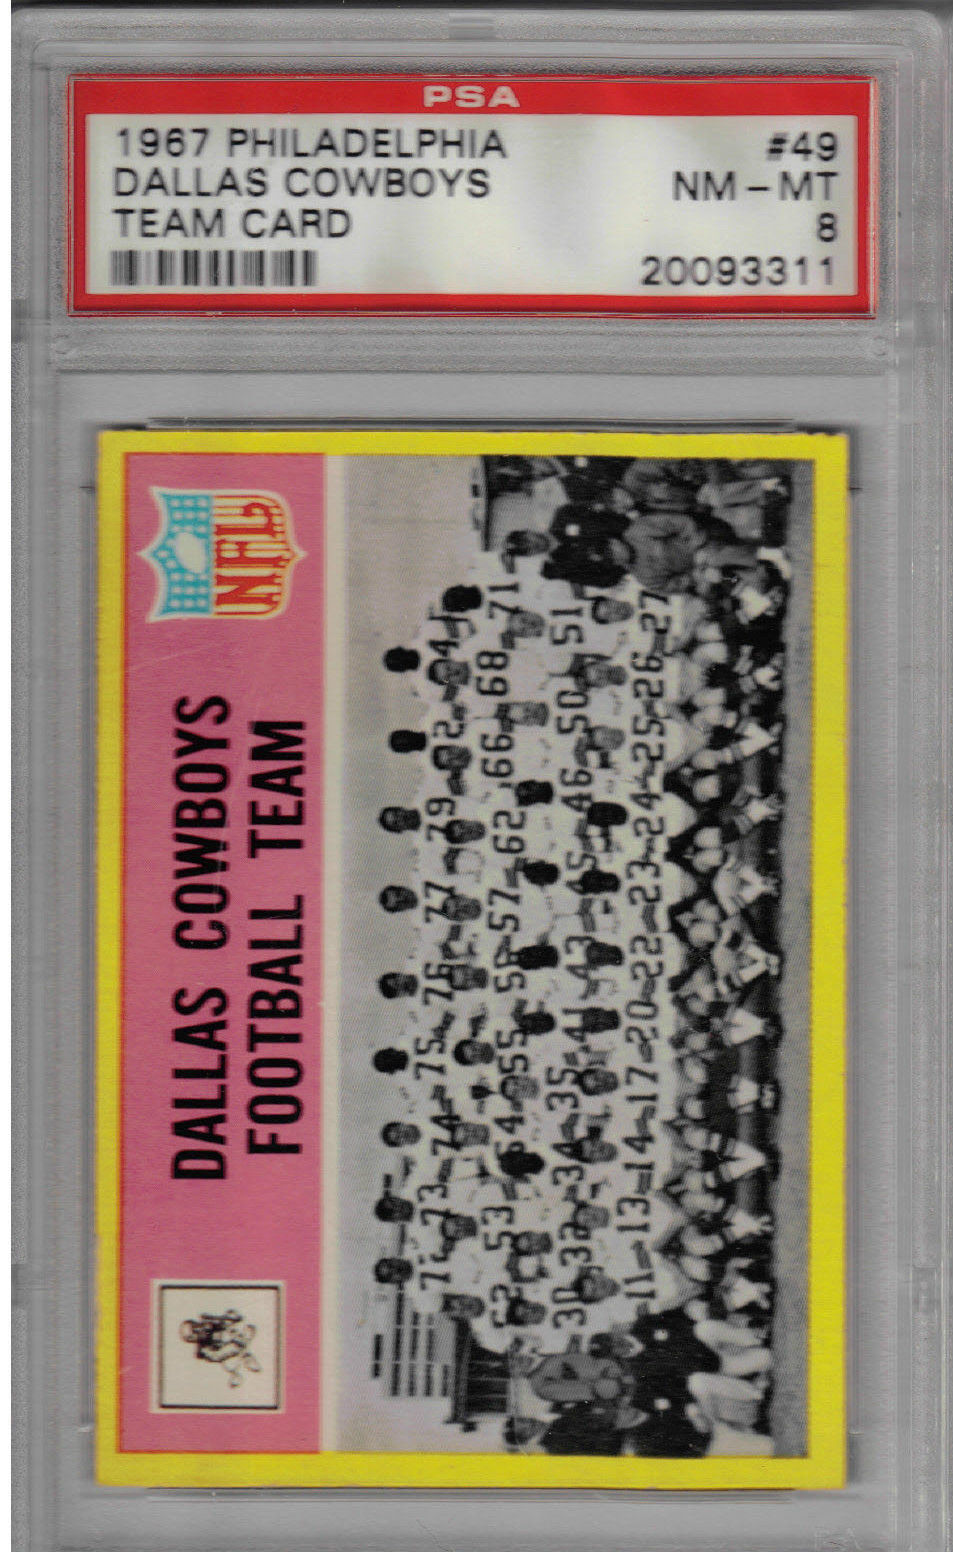 1967 Philadelphia #49 Dallas Cowboys Team Card Meredith PSA 8